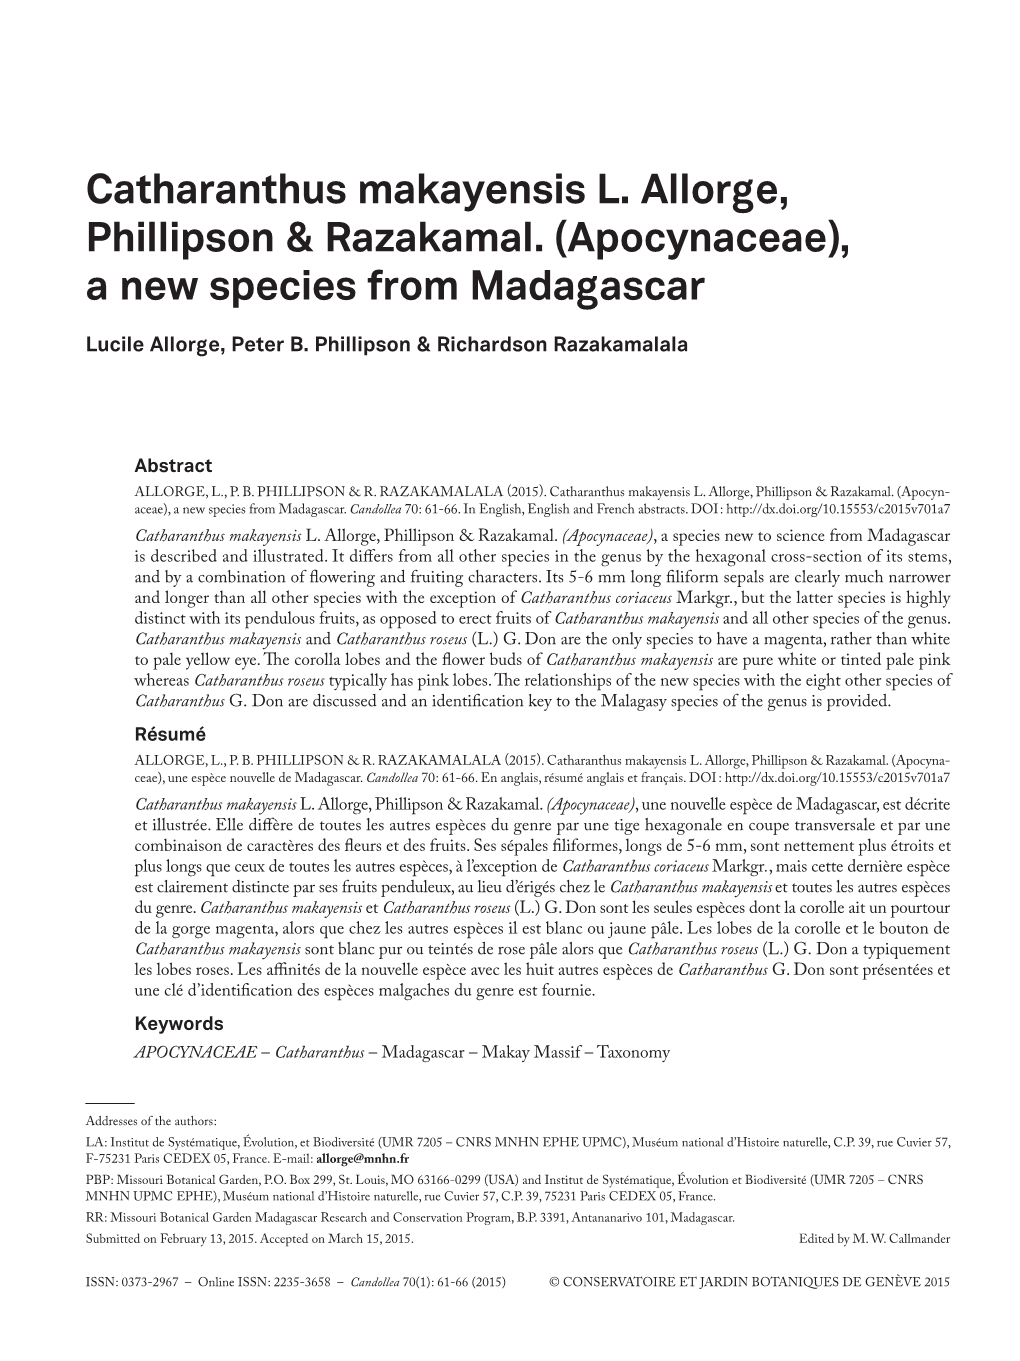 Catharanthus Makayensis L. Allorge, Phillipson & Razakamal